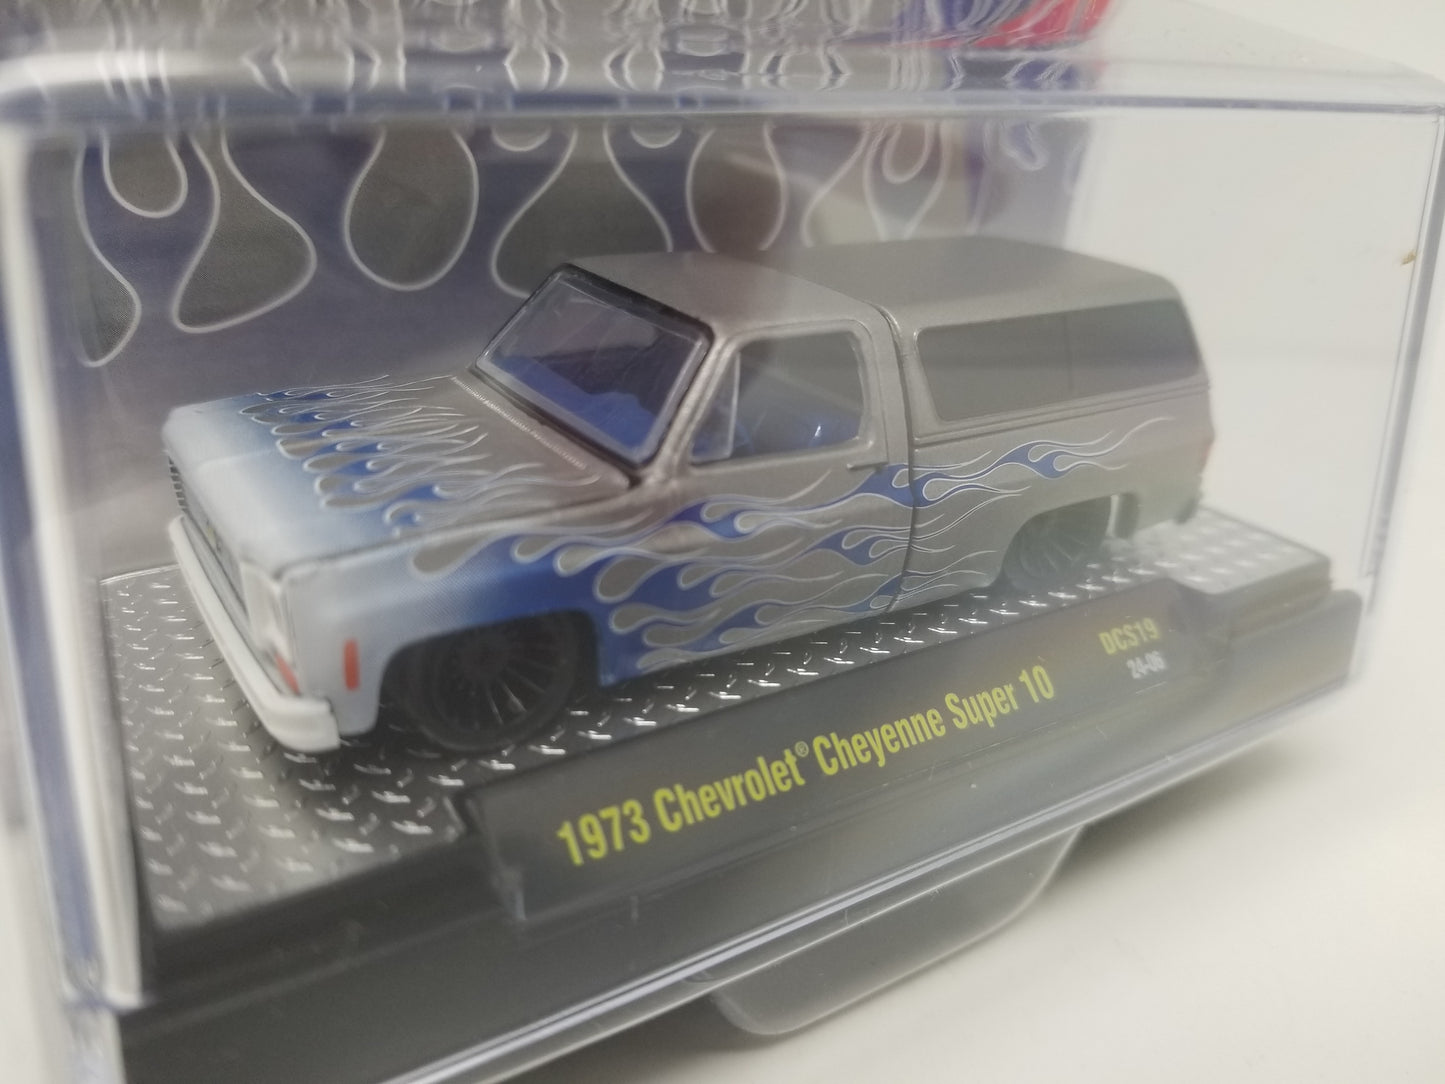 M2 1973 Chevrolet Cheyenne Super 10 - limited to 2000